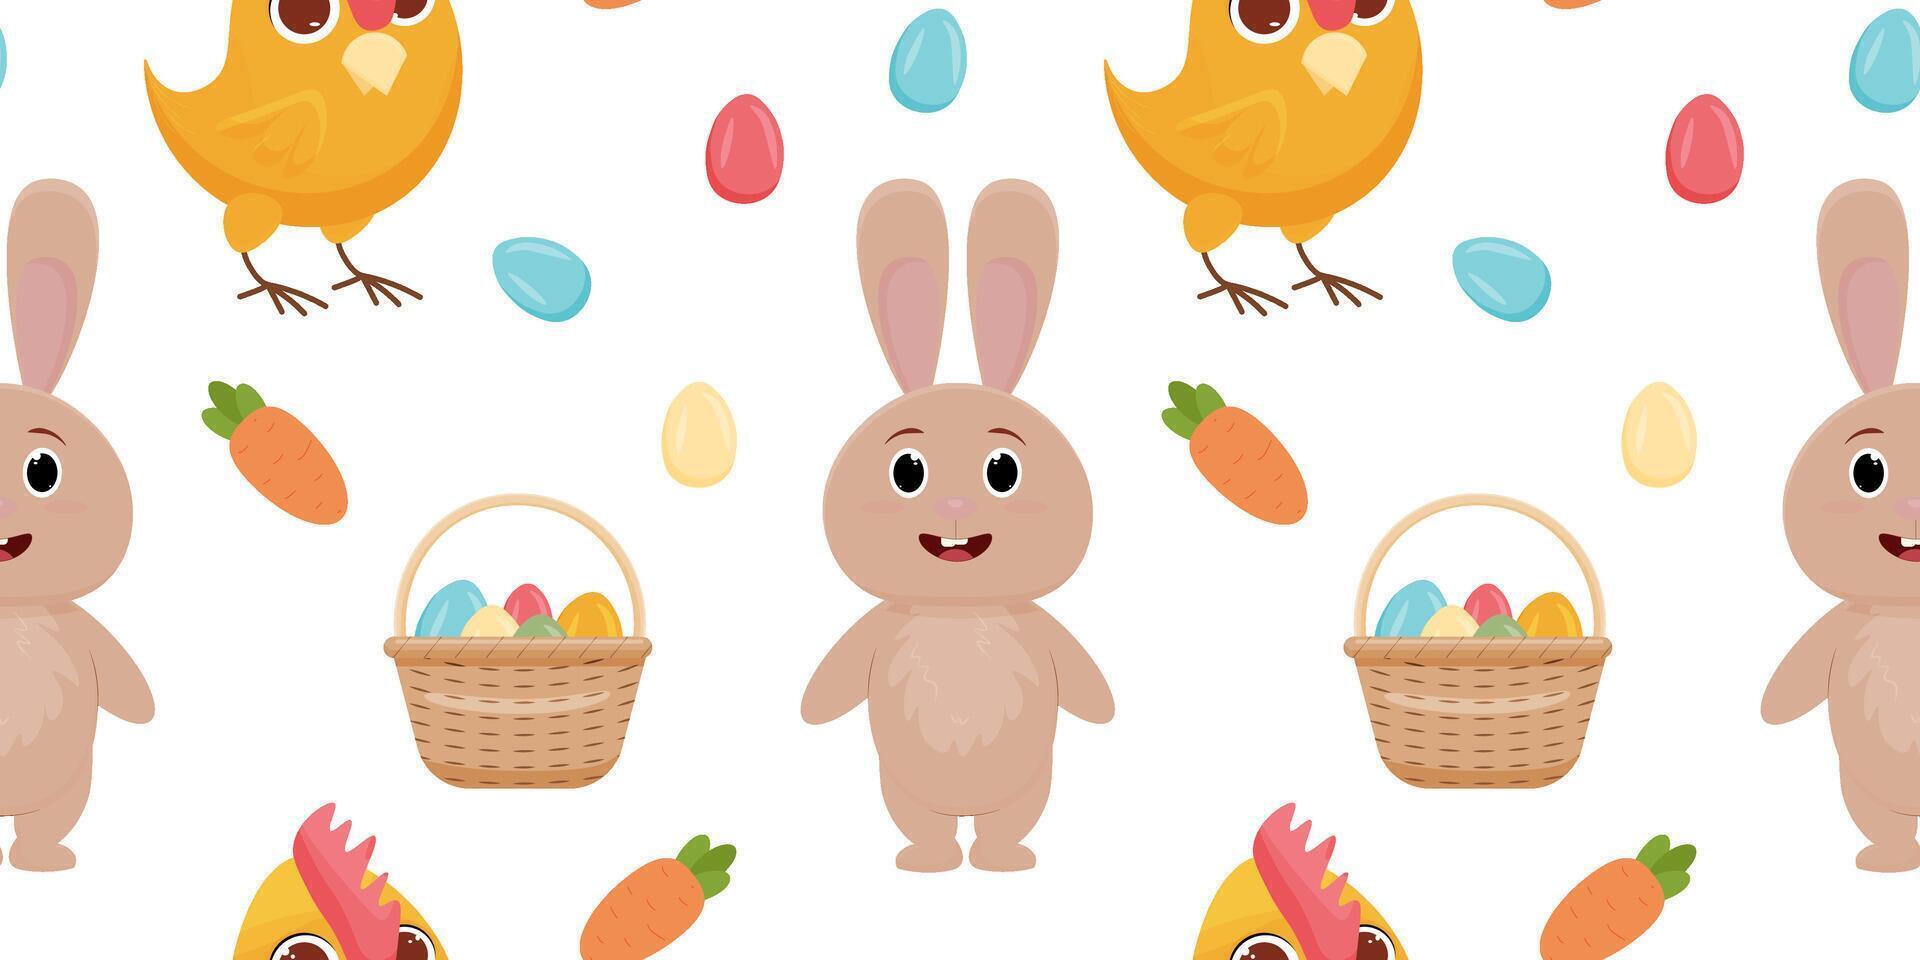 sin costura modelo de contento Pascua de Resurrección. conejo, pollo, huevos, tarta, zanahoria. vector ilustración